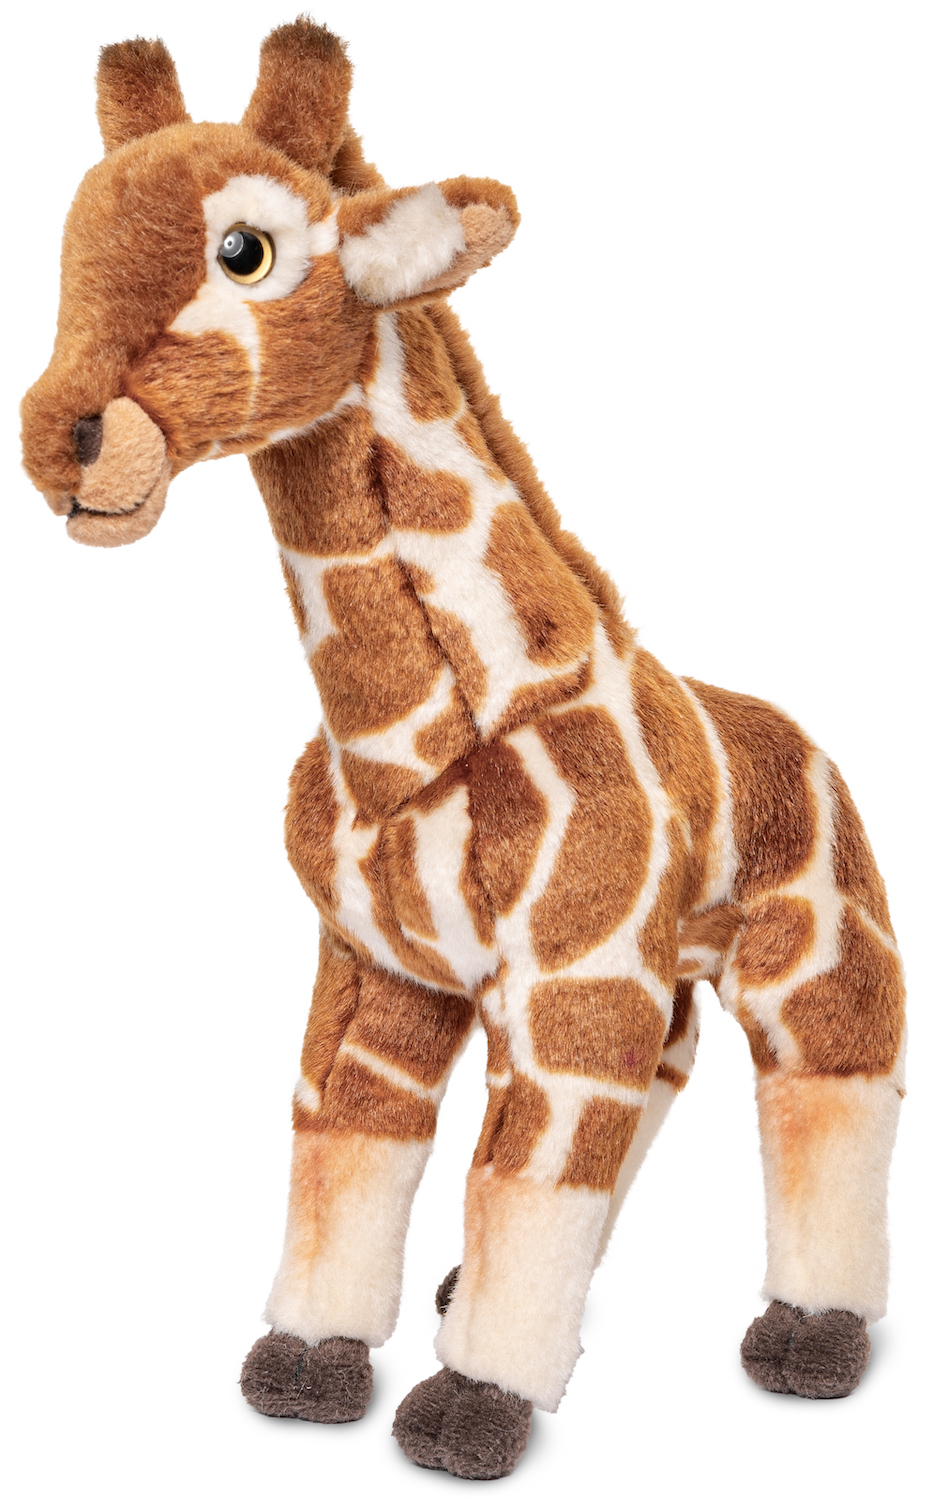 Giraffe, stehend - 30 cm (Höhe) 